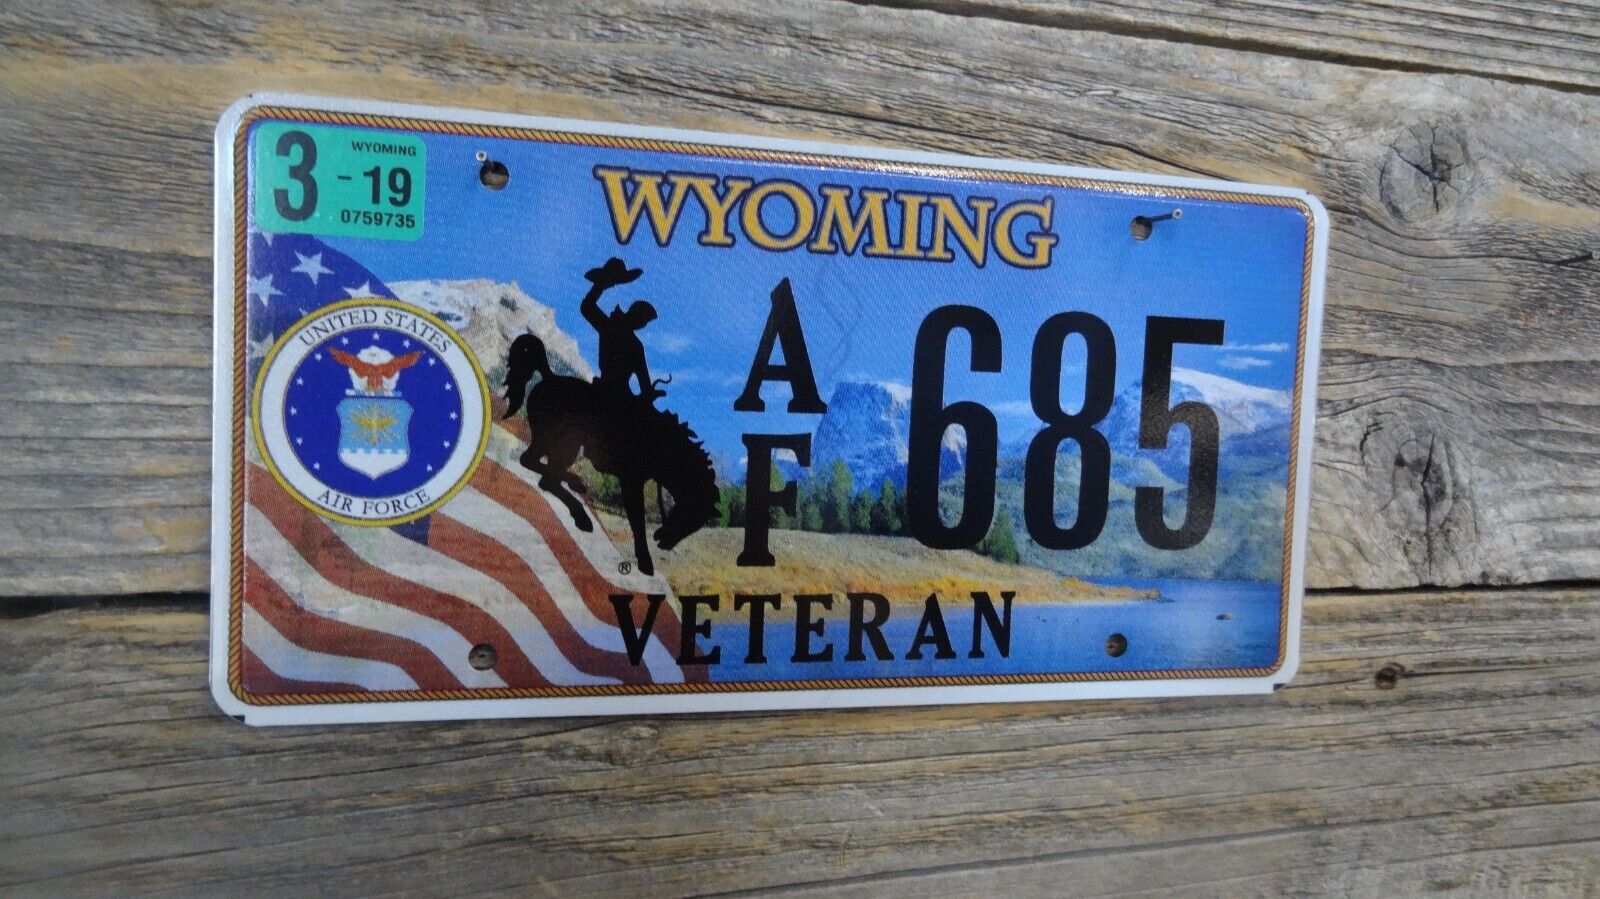 2019 Wyoming Cowboy Bucking Horse Air Force Veteran low # rear license plate